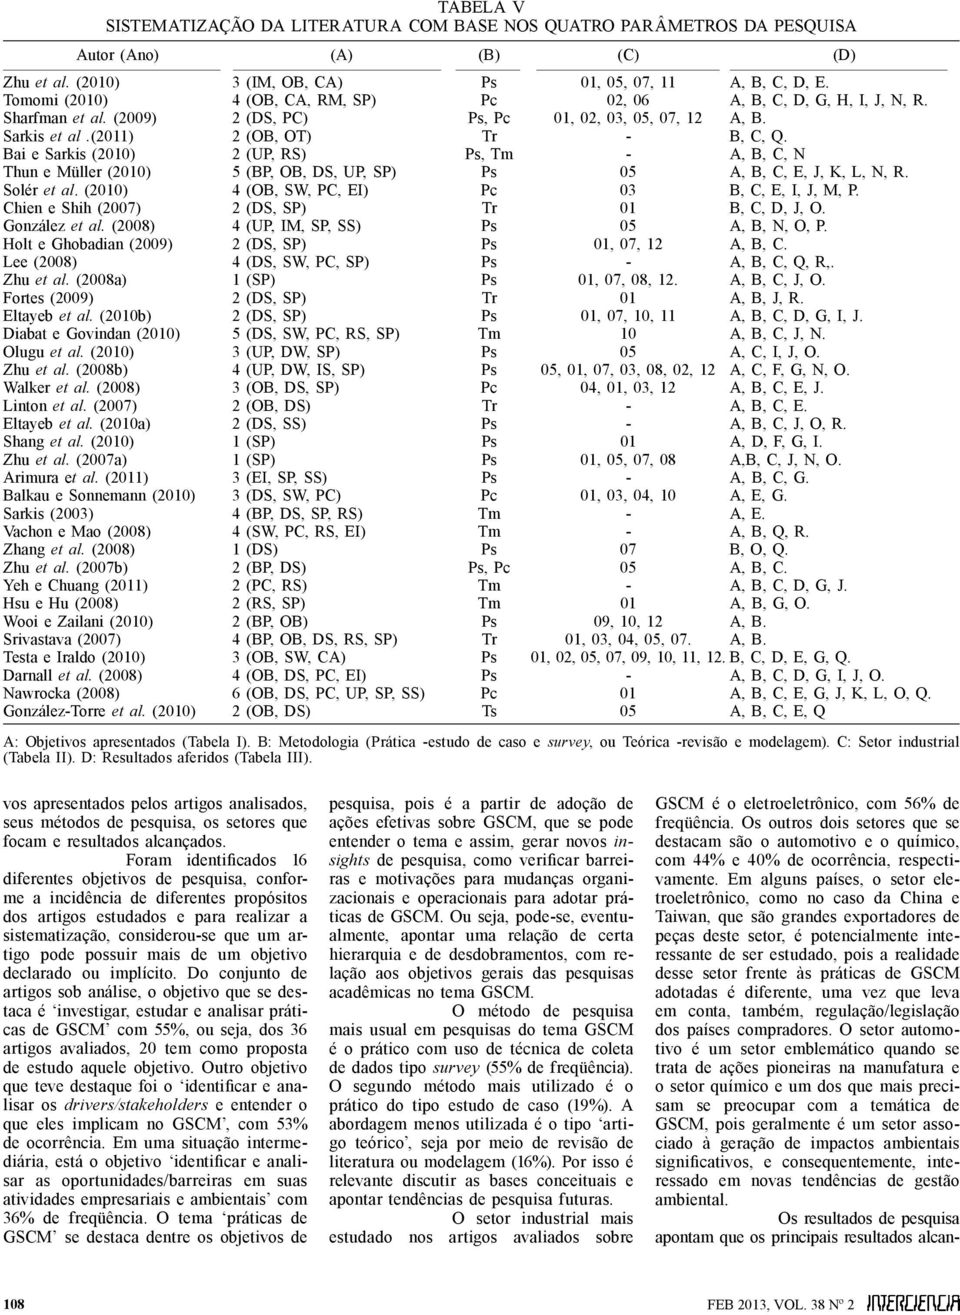 Bai e Sarkis (2010) 2 (UP, RS) Ps, Tm - A, B, C, N Thun e Müller (2010) 5 (BP, OB, DS, UP, SP) Ps 05 A, B, C, E, J, K, L, N, R. Solér et al. (2010) 4 (OB, SW, PC, EI) Pc 03 B, C, E, I, J, M, P.